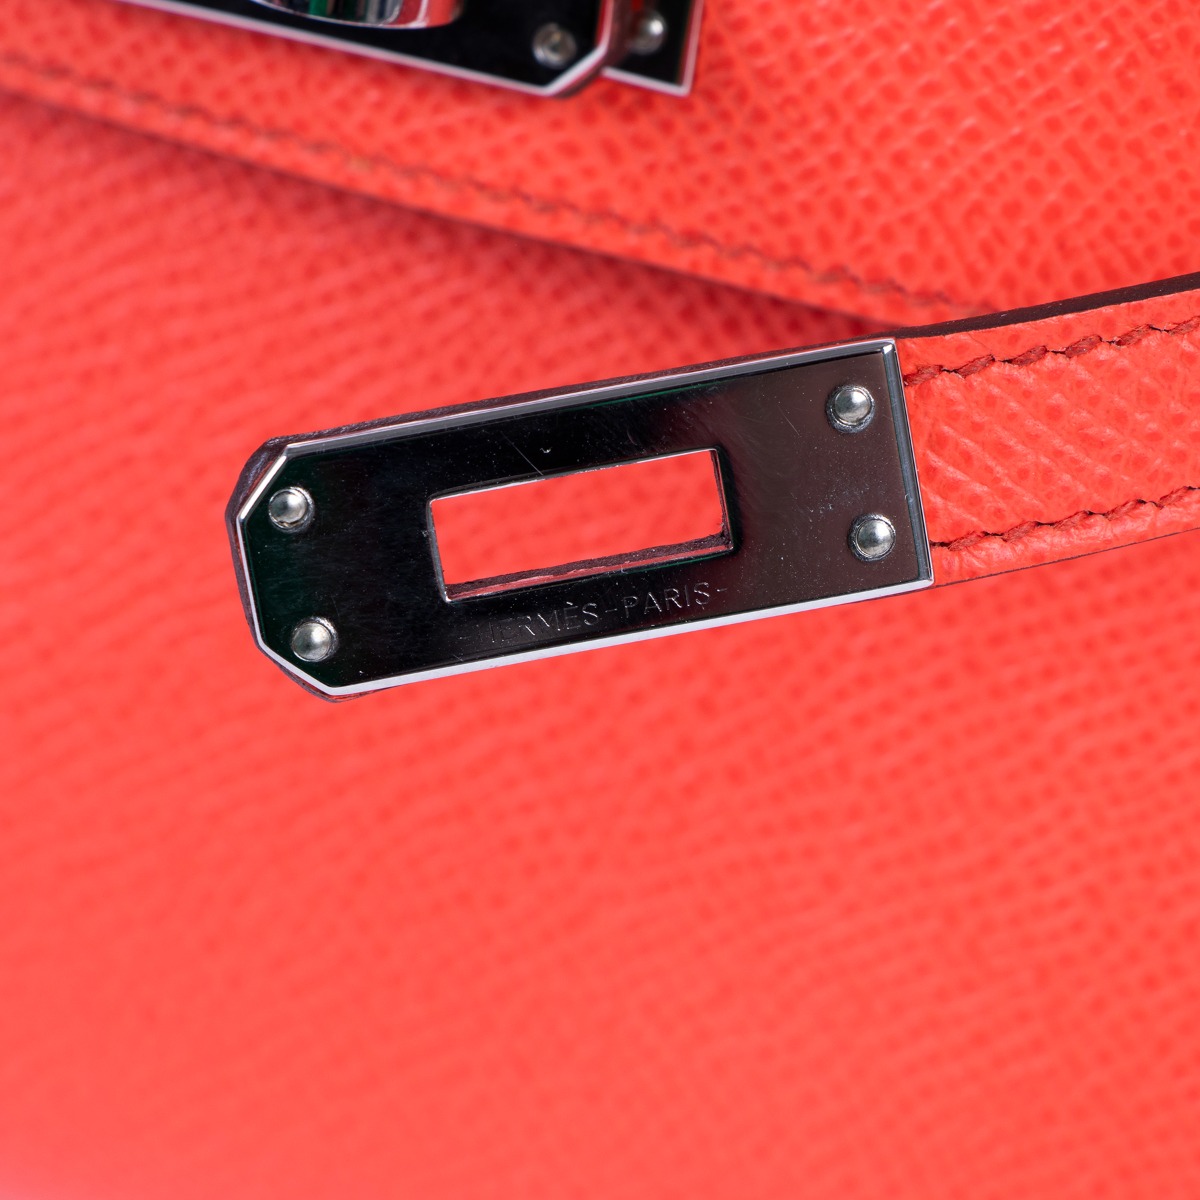 Hermes Kelly Mini II Bag Pink Epsom with Palladium Hardware 20 Pink 16149901